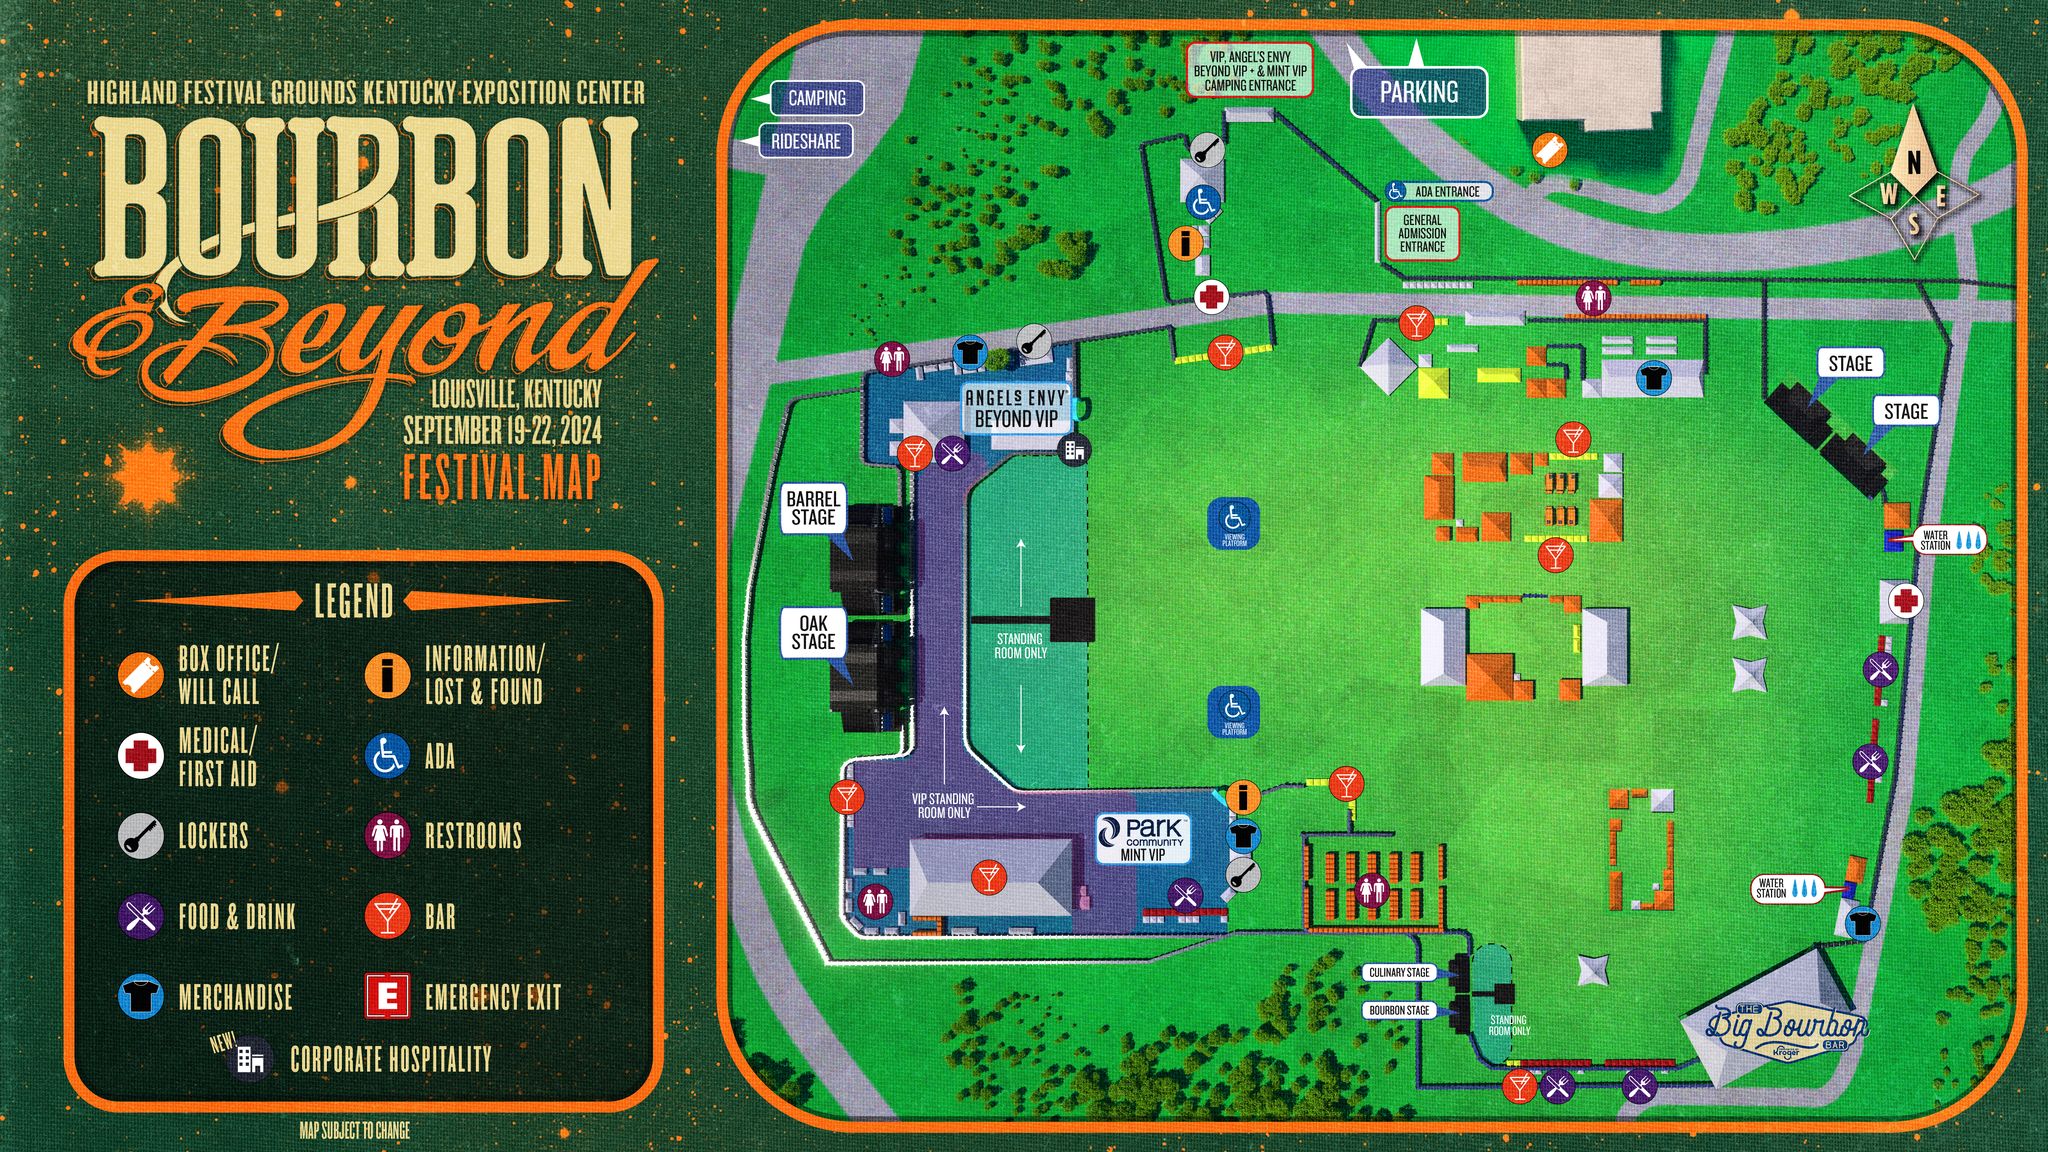 Festival Info - Bourbon & Beyond